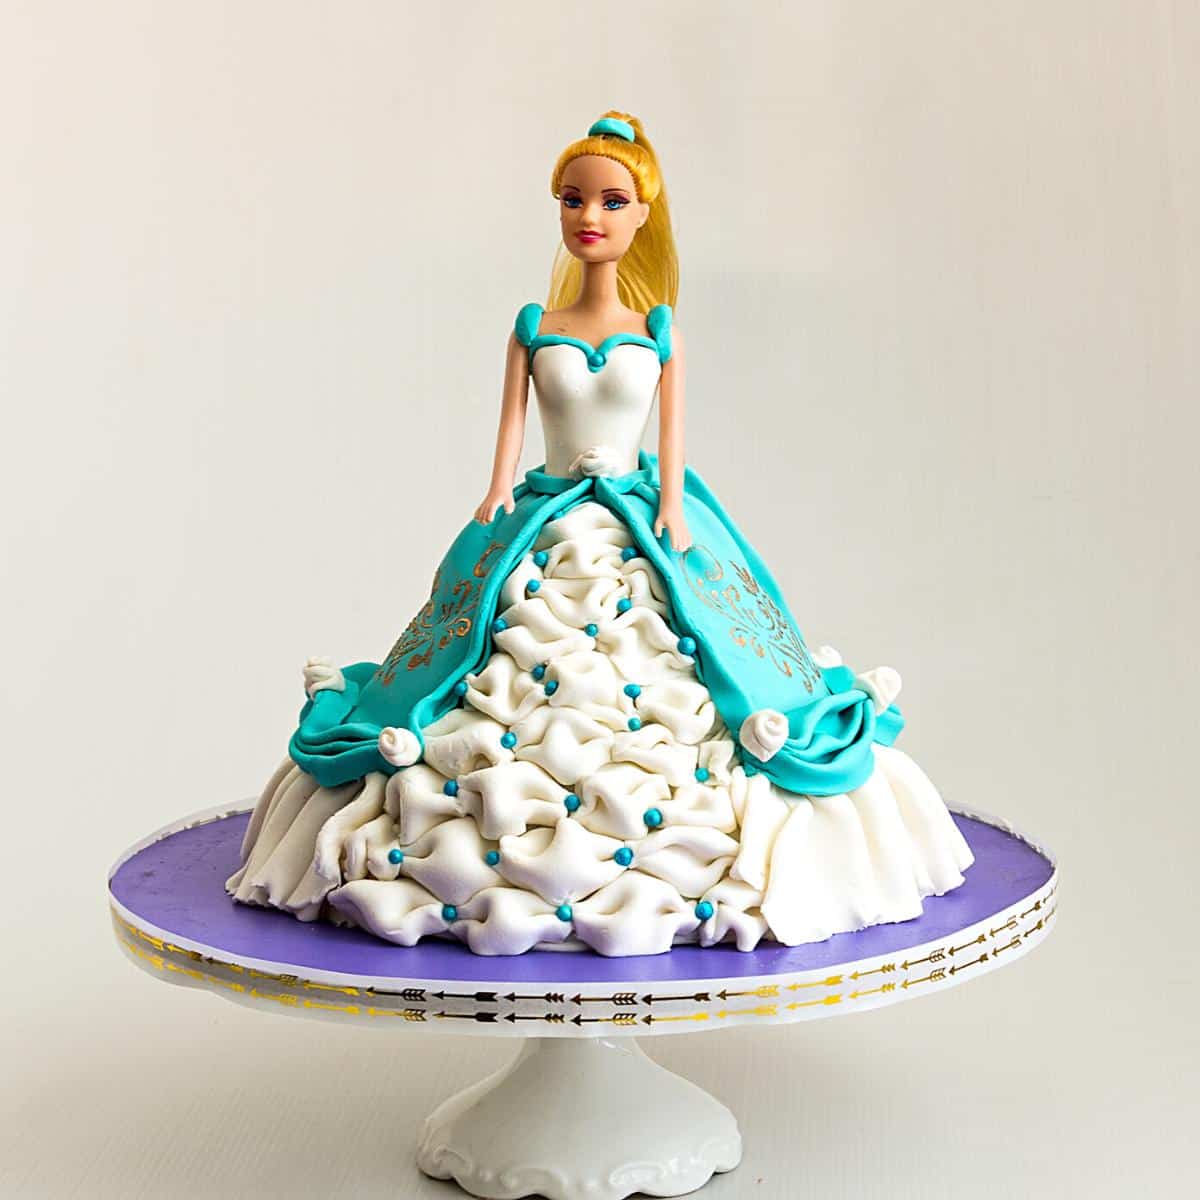 Disney Princess Cake Topper 3 pieces : Amazon.in: Grocery & Gourmet Foods-sgquangbinhtourist.com.vn